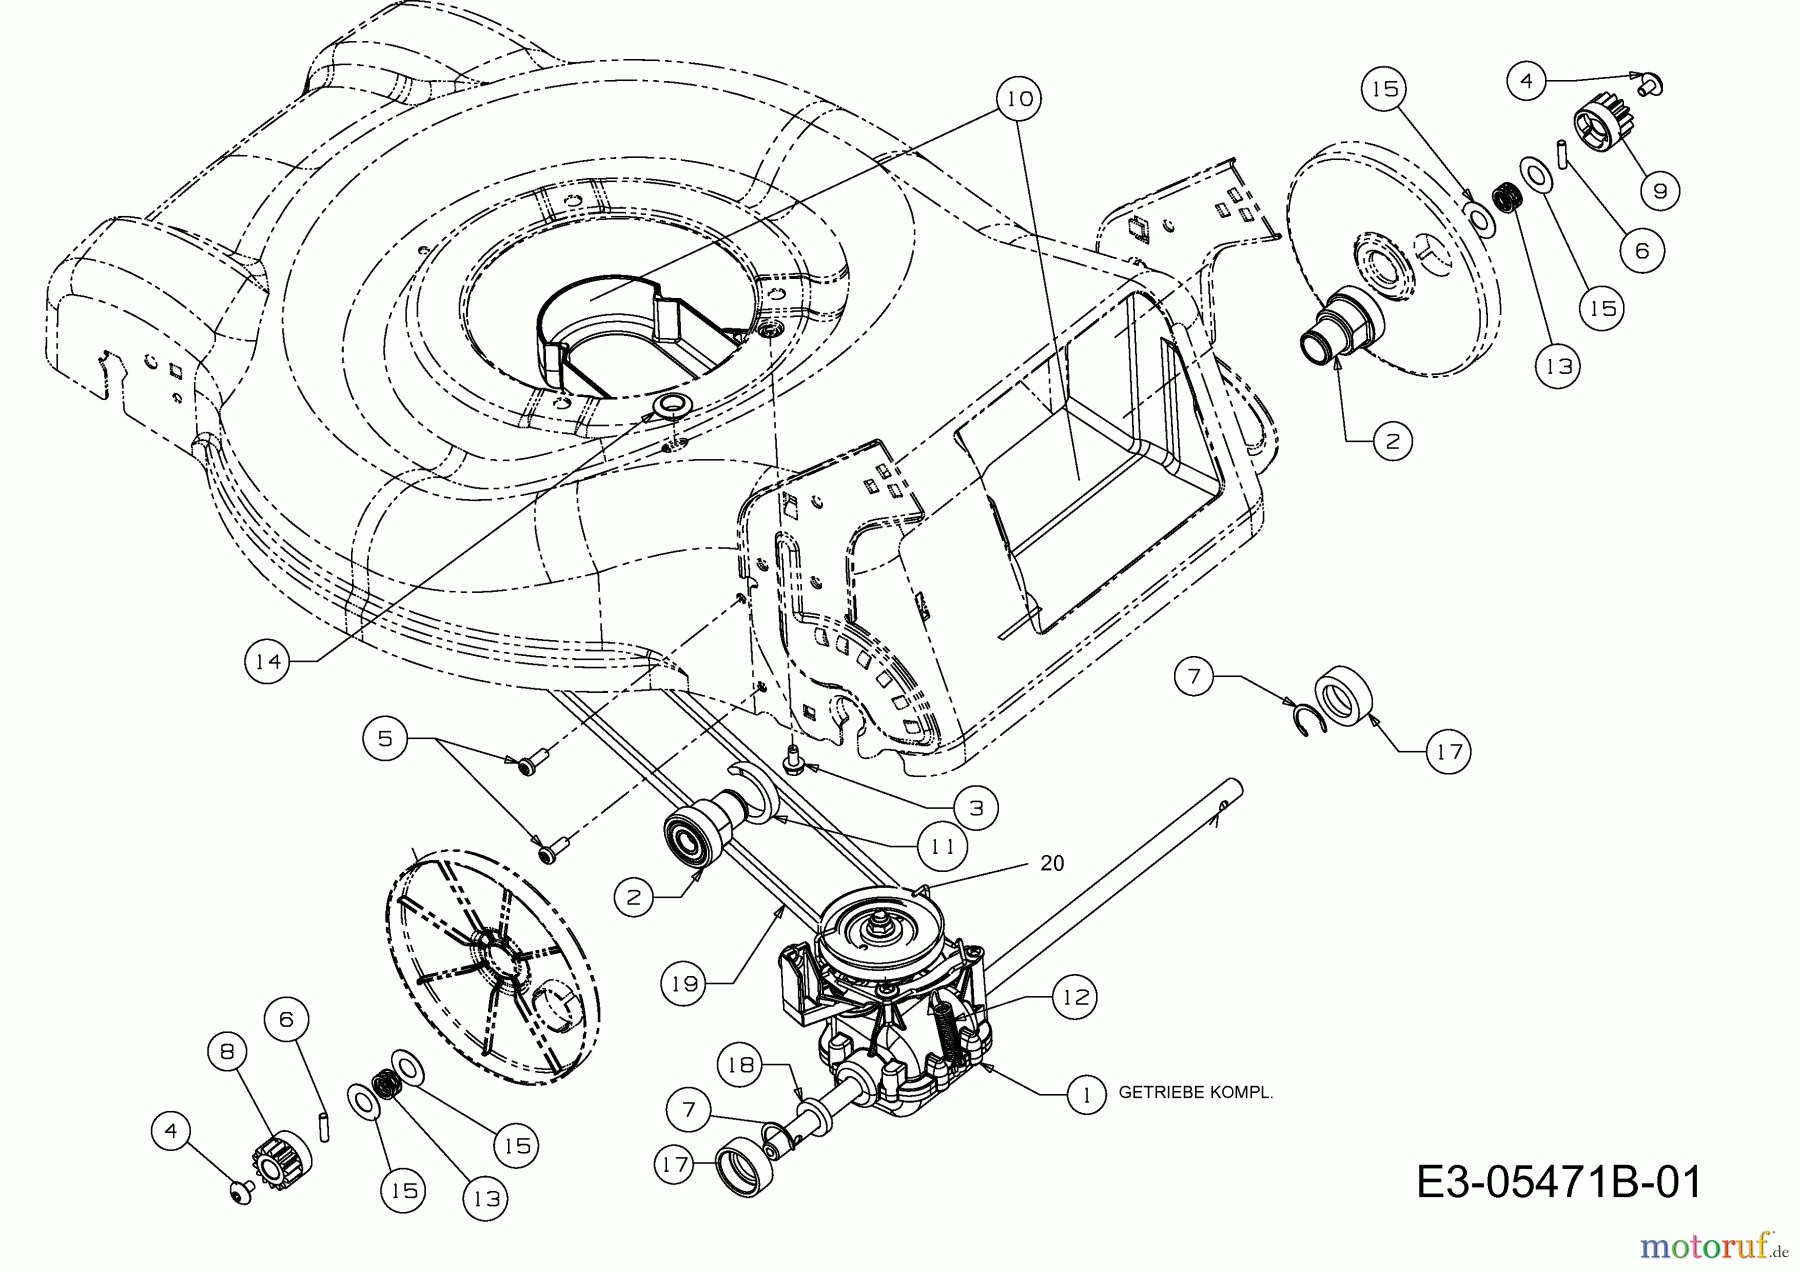  MTD Motormäher mit Antrieb 46 SPOE 12EEJ5M4600  (2012) Getriebe, Keilriemen